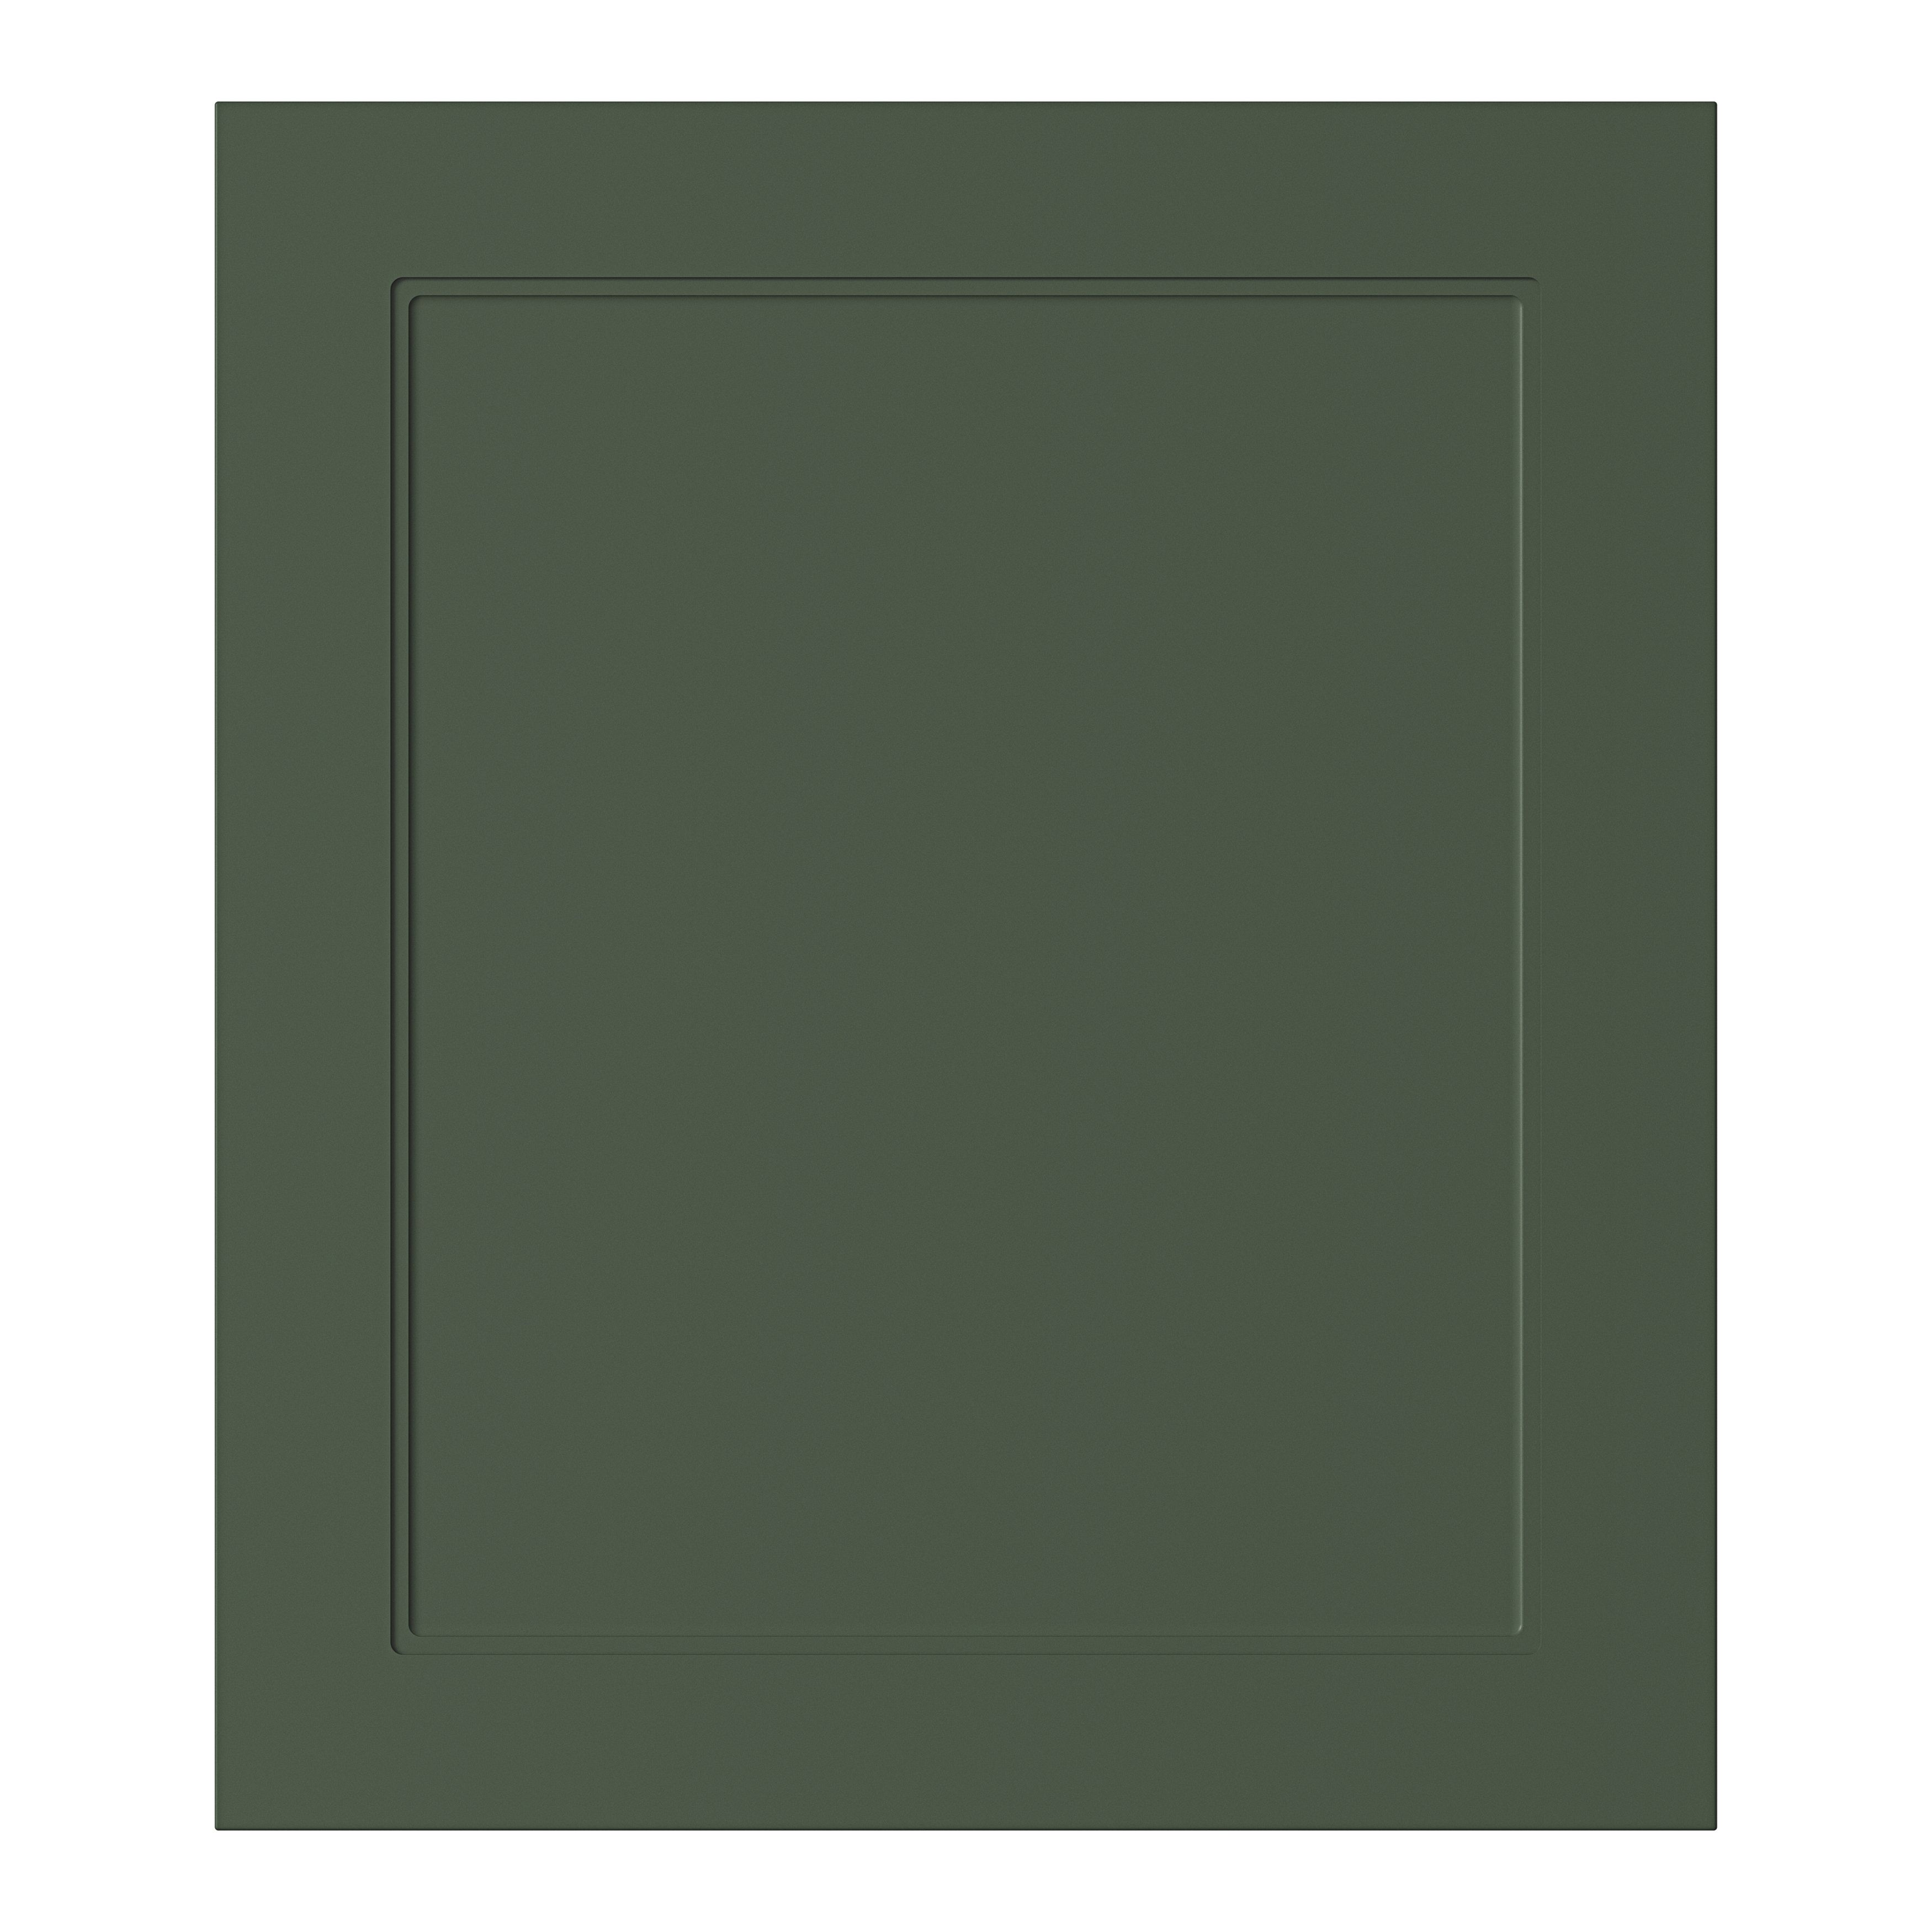 GoodHome Artemisia Matt dark green shaker Appliance Cabinet door (W)600mm (H)687mm (T)18mm